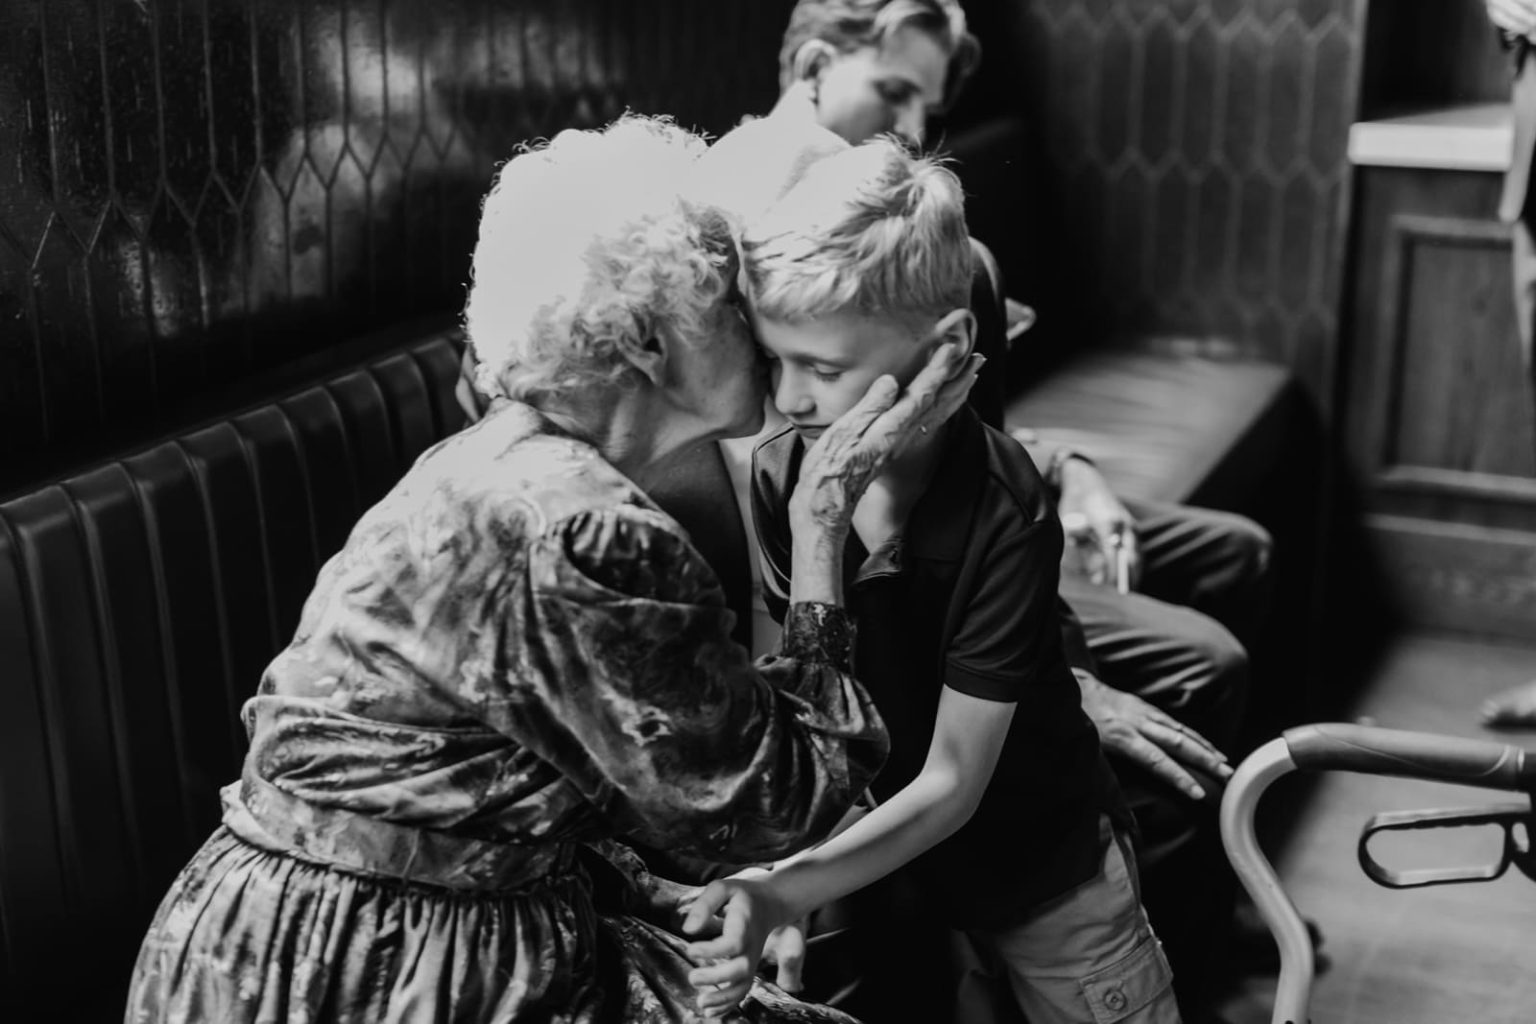 grandma kisses grandchild on cheek at wedding reception